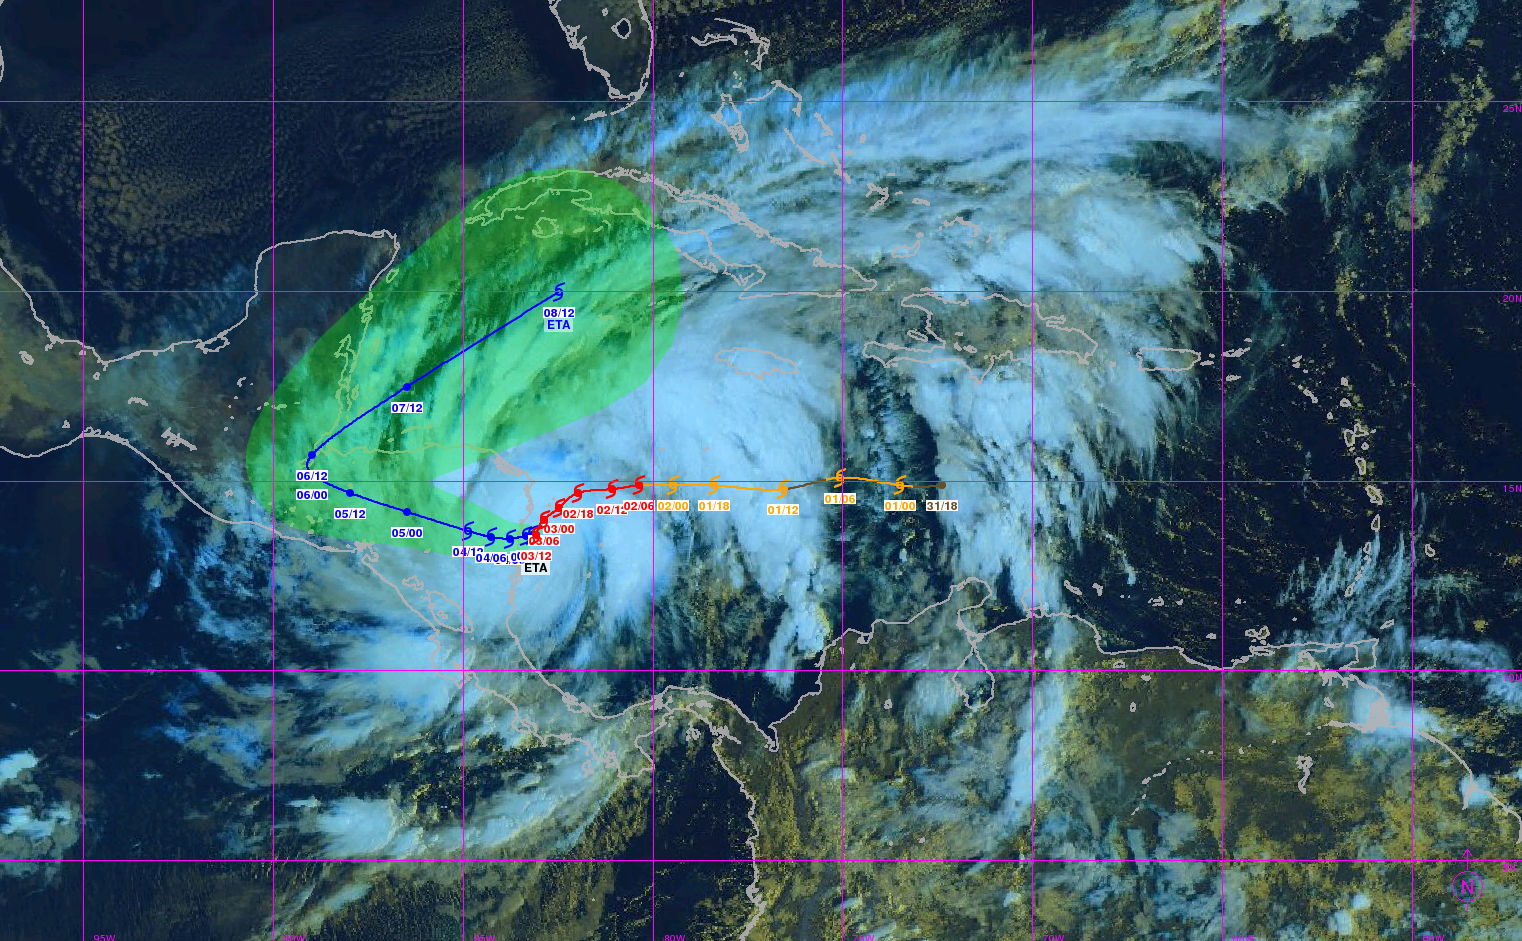     L'ouragan Eta frappe Nicaragua et Honduras

